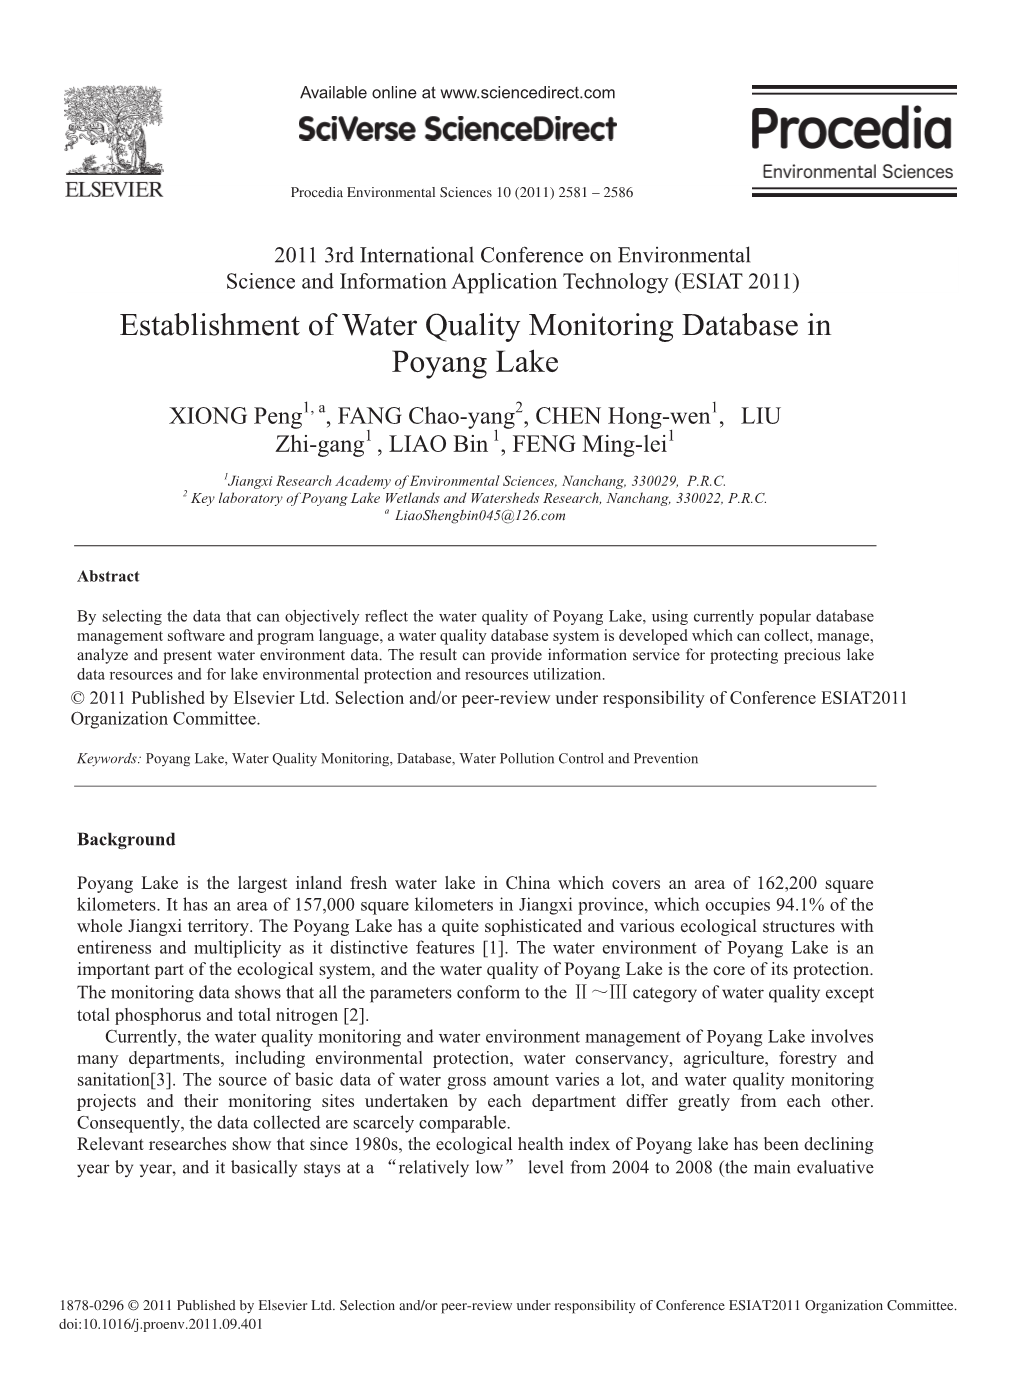 Establishment of Water Quality Monitoring Database in Poyang Lake